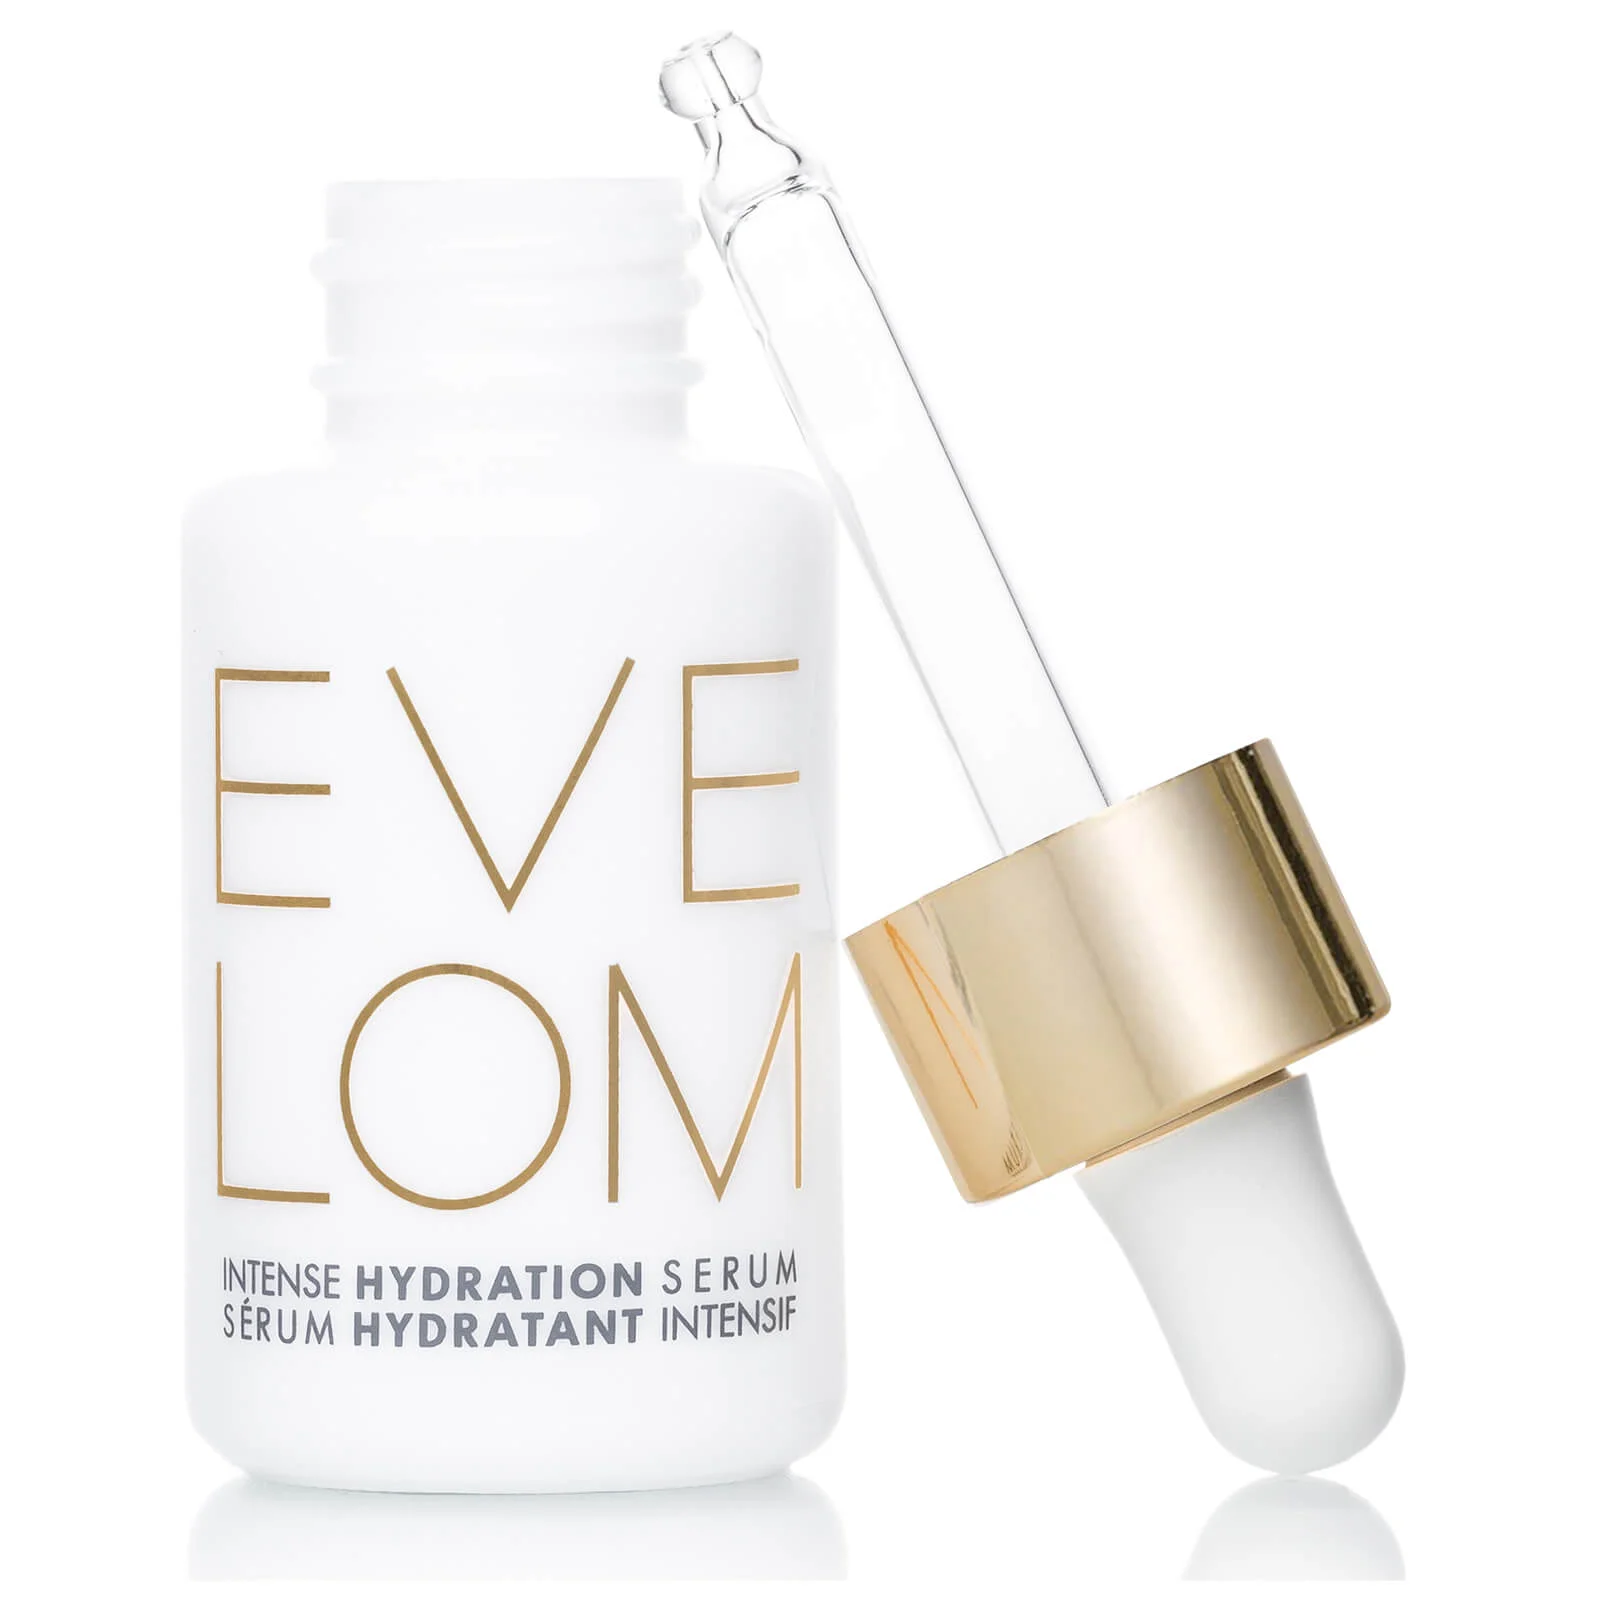 Eve Lom Intense Hydration Serum 30ml Image 1